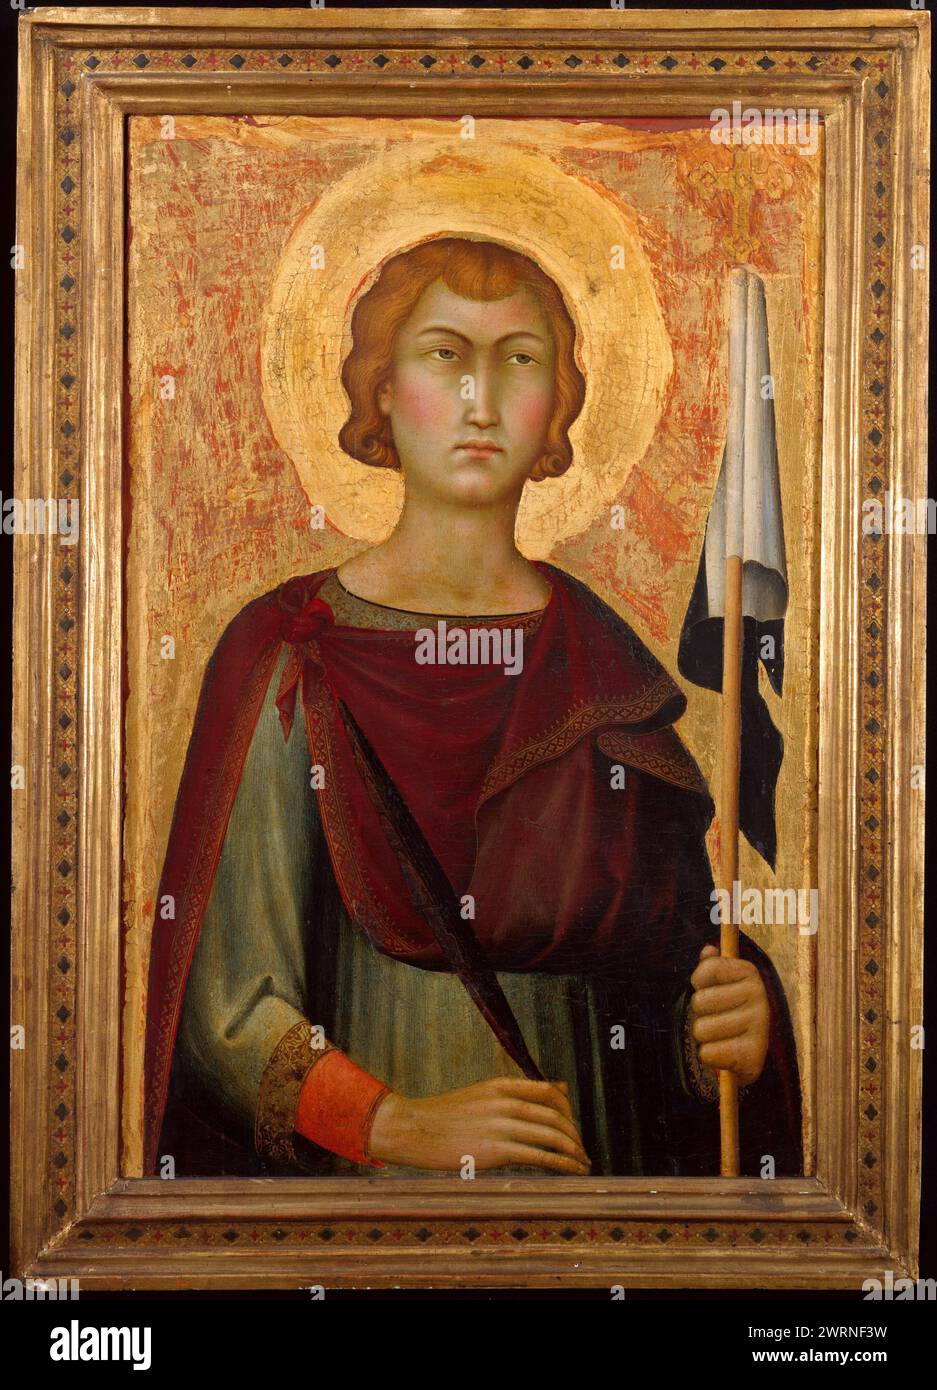 Saint Ansanus, by Artist Italian artist Simone Martini, Date: ca. 1326, Tempera on wood Stock Photo